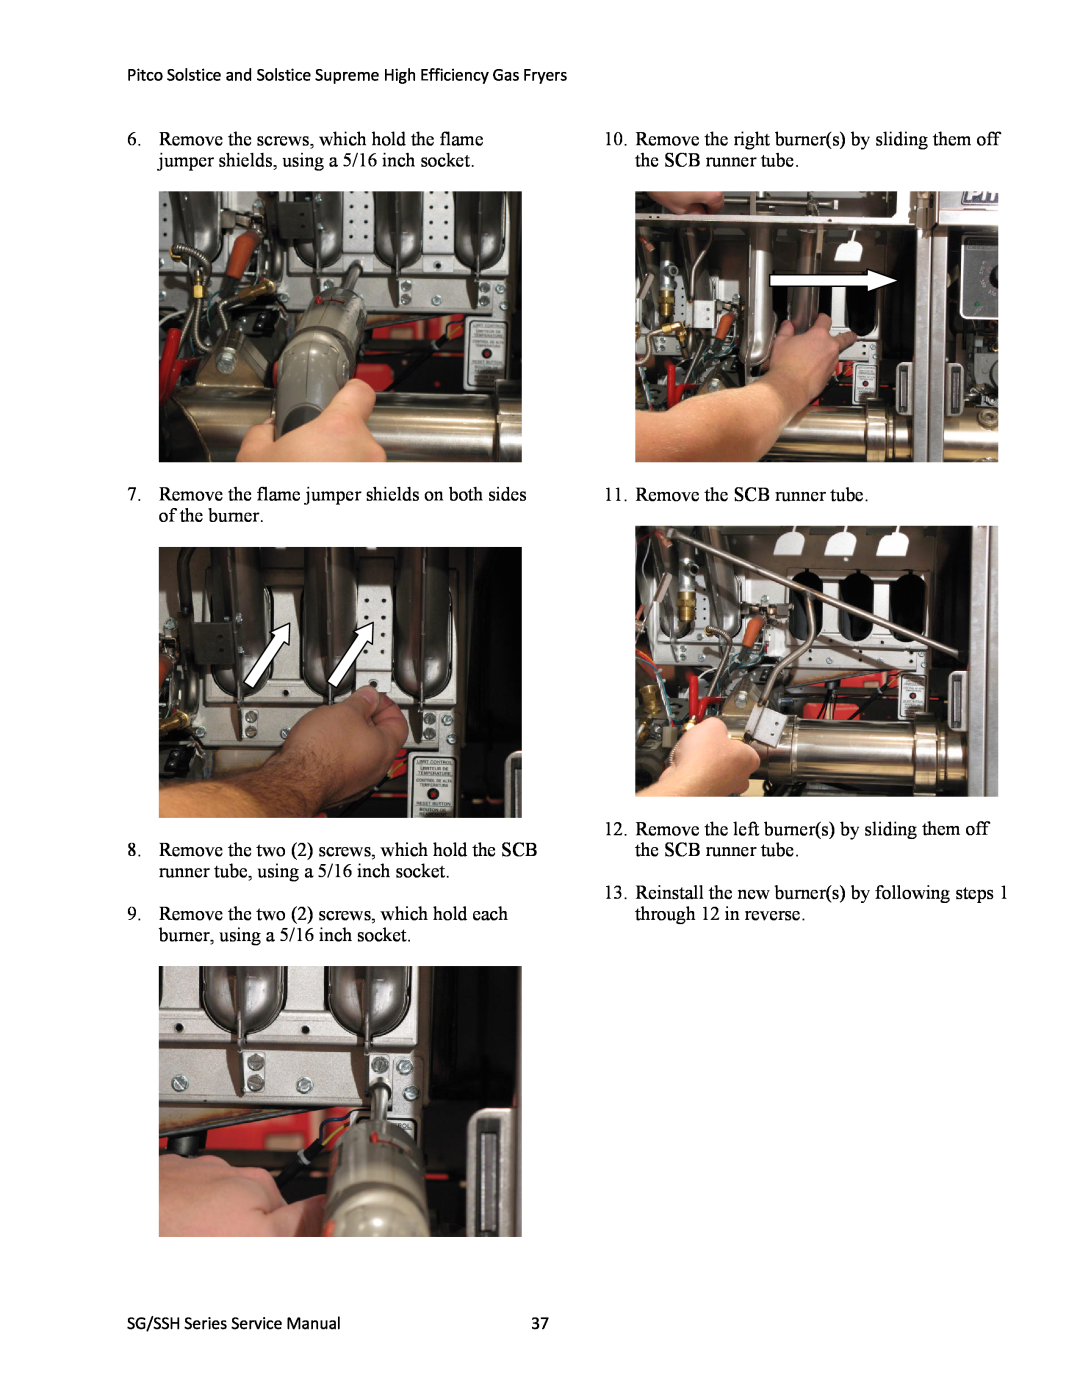 Pitco Frialator L22-345 manual Remove the SCB runner tube 